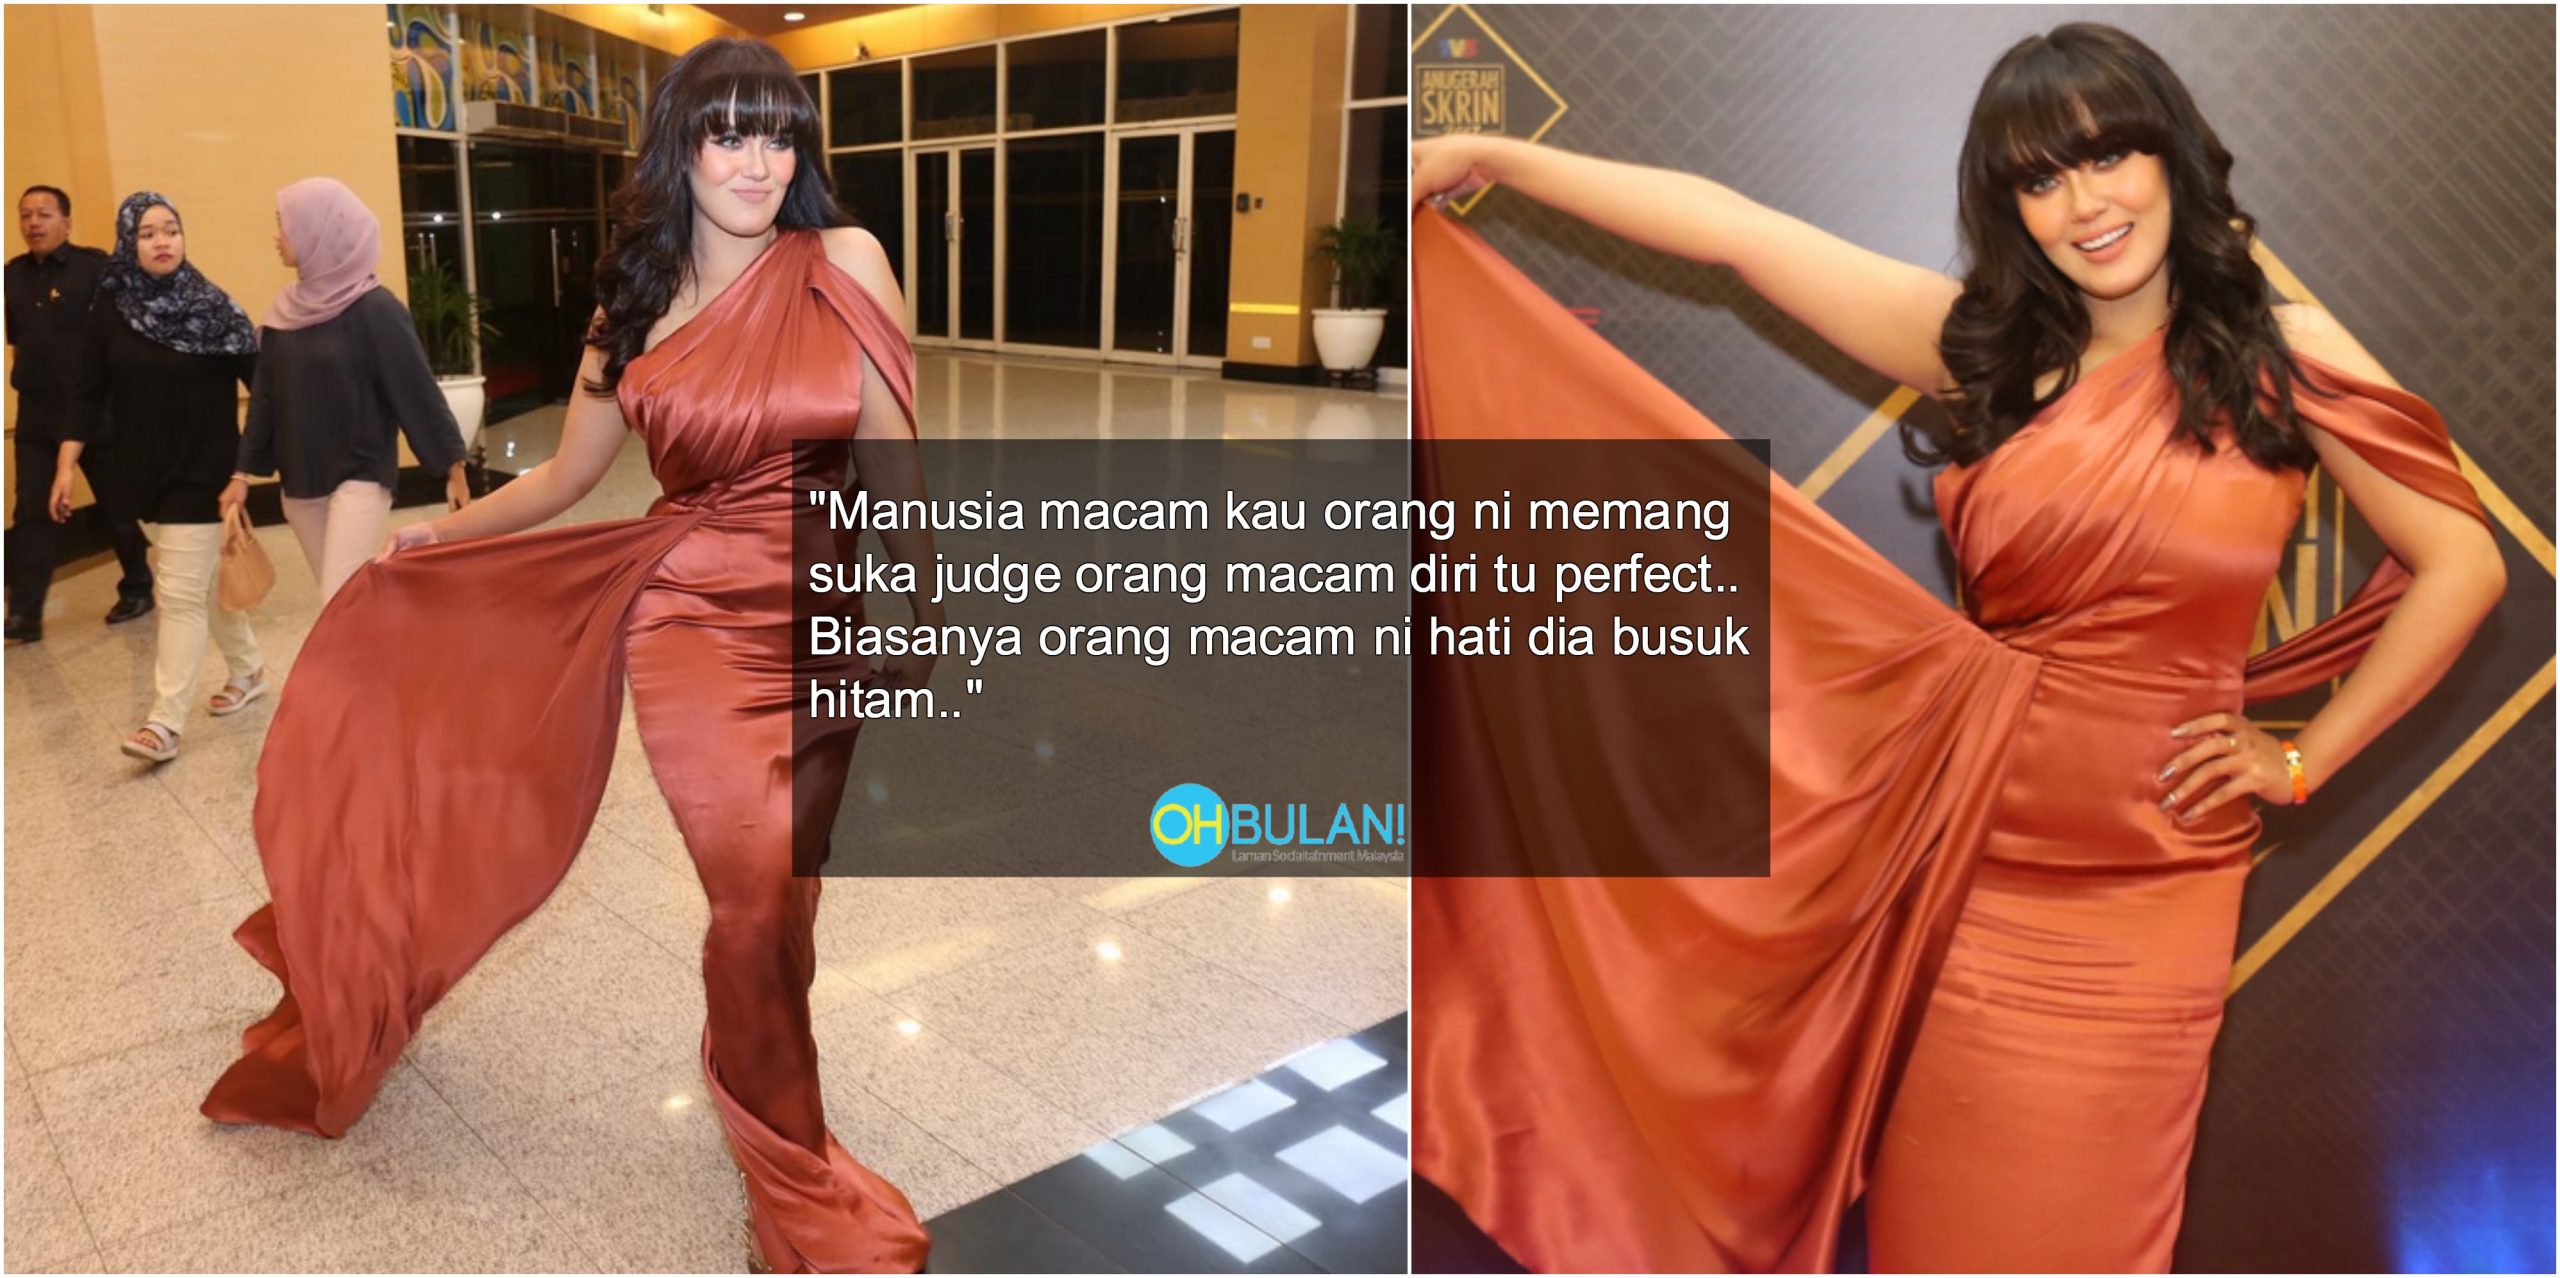 ‘Aku Gemuk Orang Sibuk. Cakap Aku Macam Mak Orang’- Netizen Kritik Saiz Badan, Uqasha Mengamuk Di Instagram